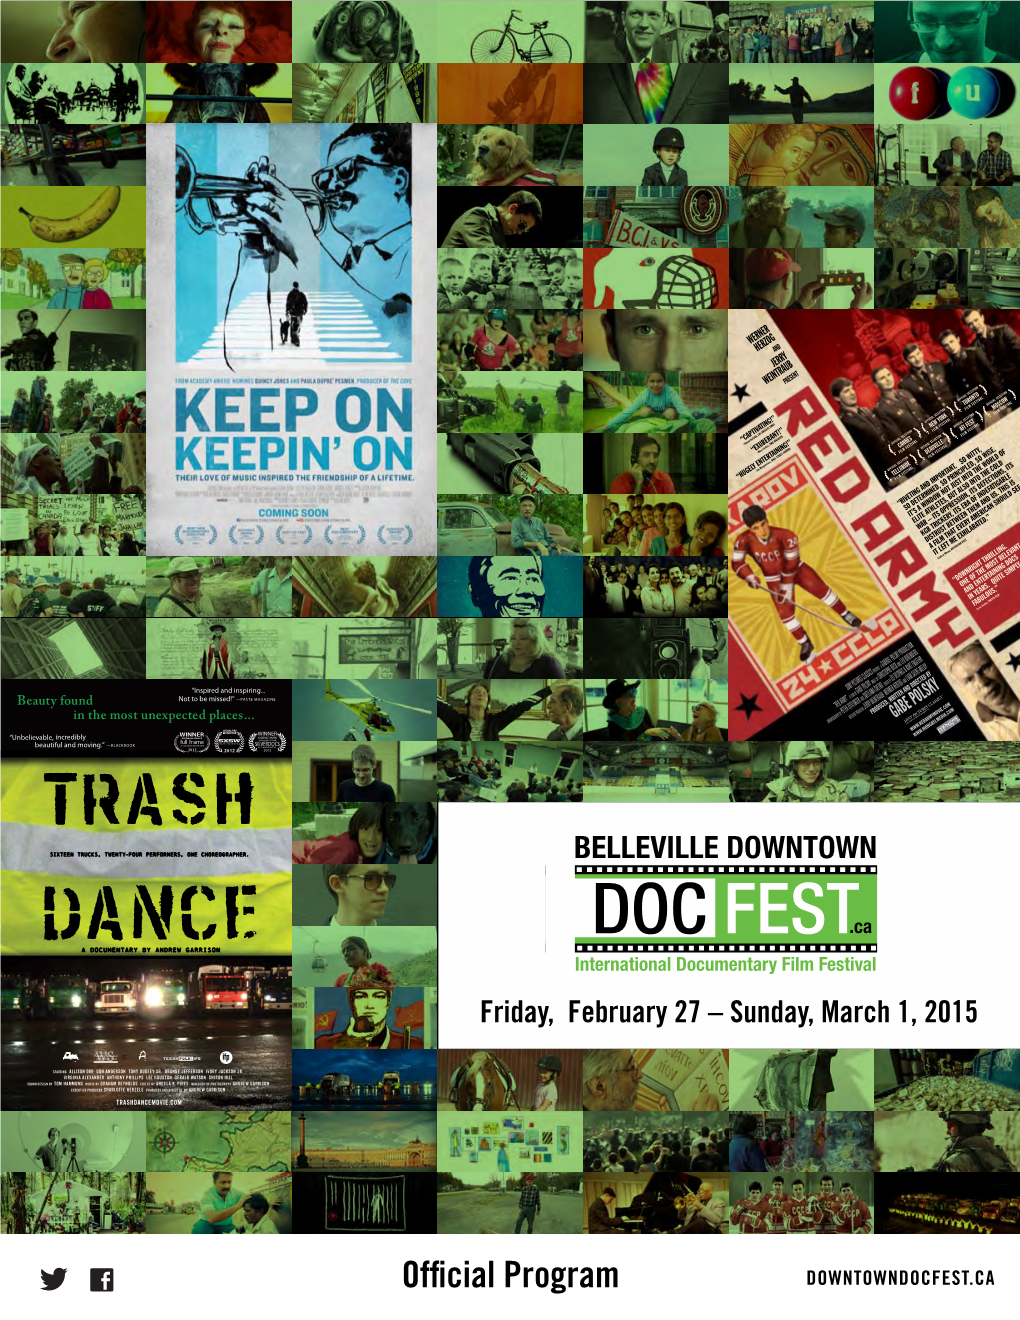 DOC FEST.Ca Dancea Documentary by Andrew Garrison International Documentary Film Festival Friday, February 27 – Sunday, March 1, 2015